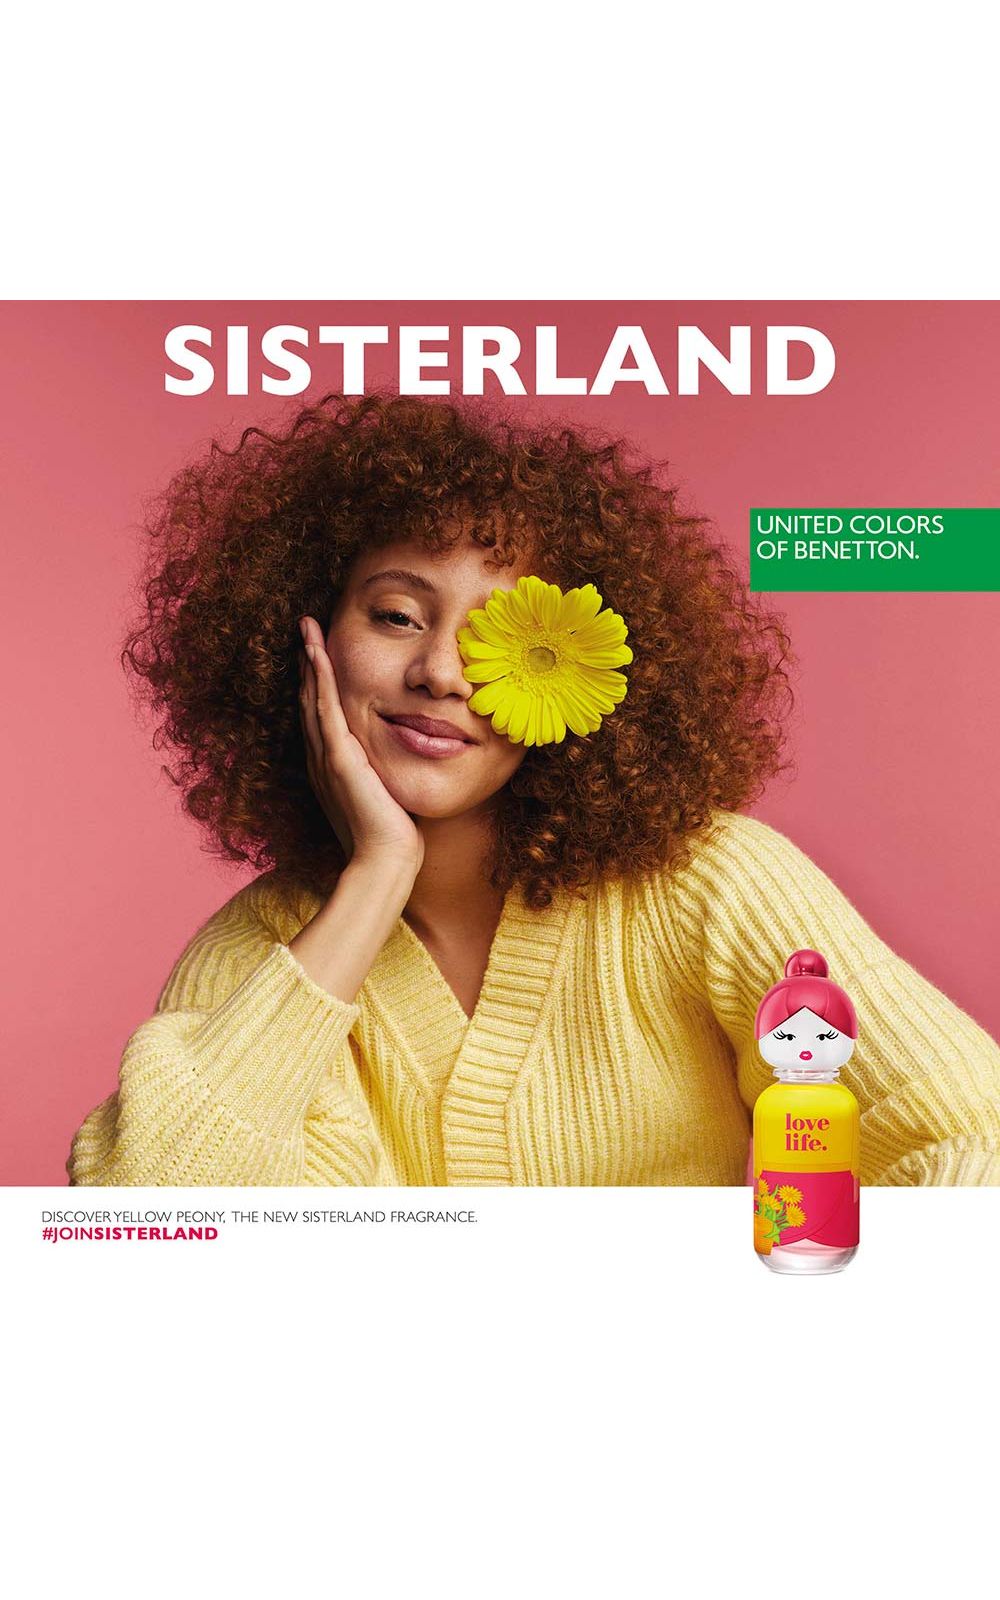 Sisterland United Colors Of Benetton Yellow Peony 80ml - Perfume